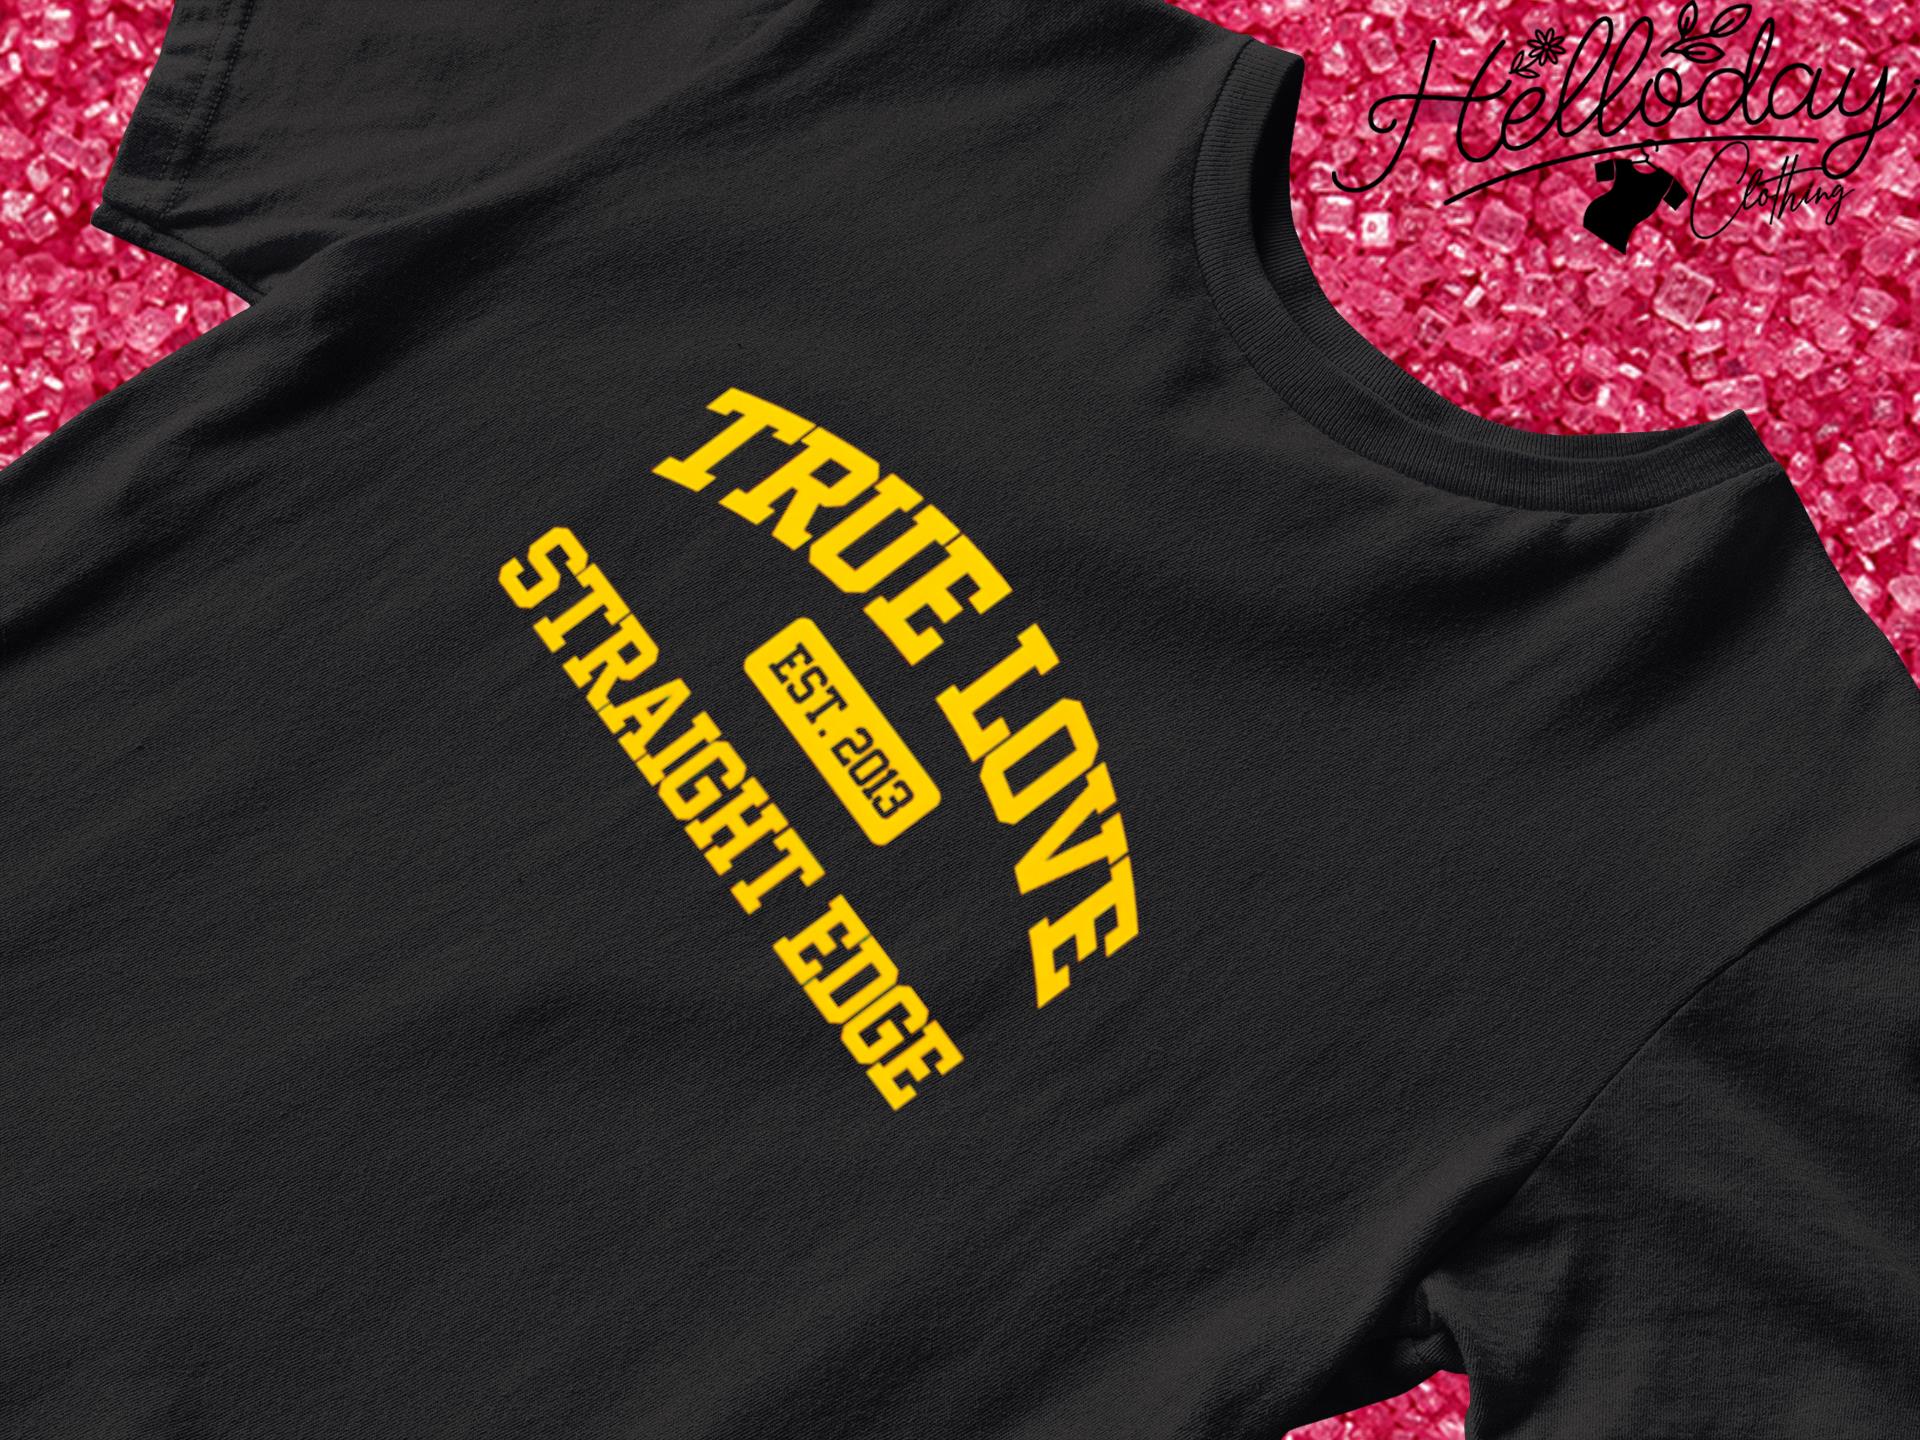 True Love Straight Edge est 2013 shirt